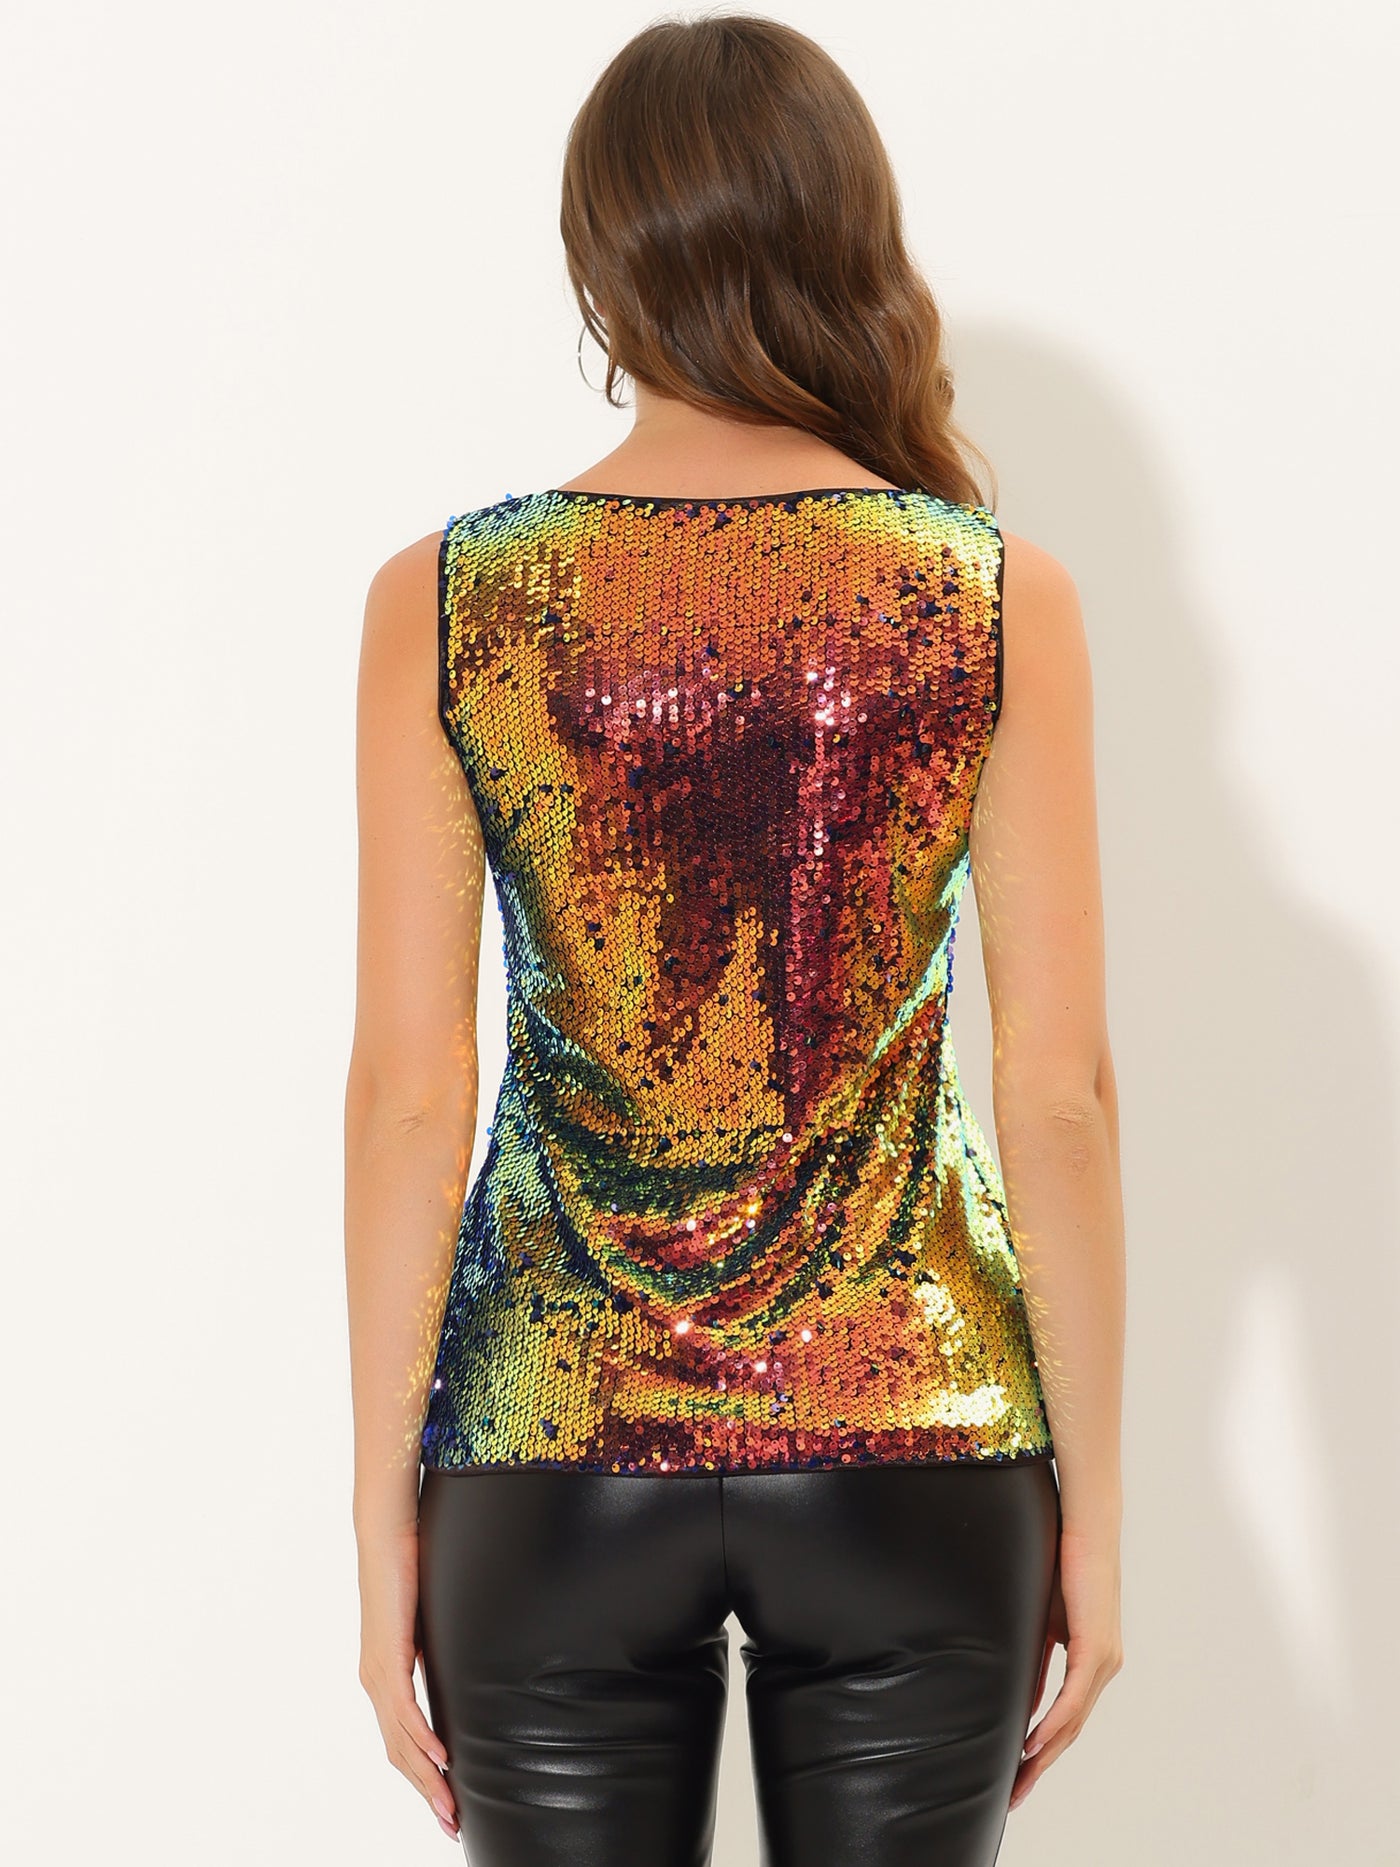 Allegra K Halloween Sequin Tank Top for Sparkle Camisole Glitter Party Vest